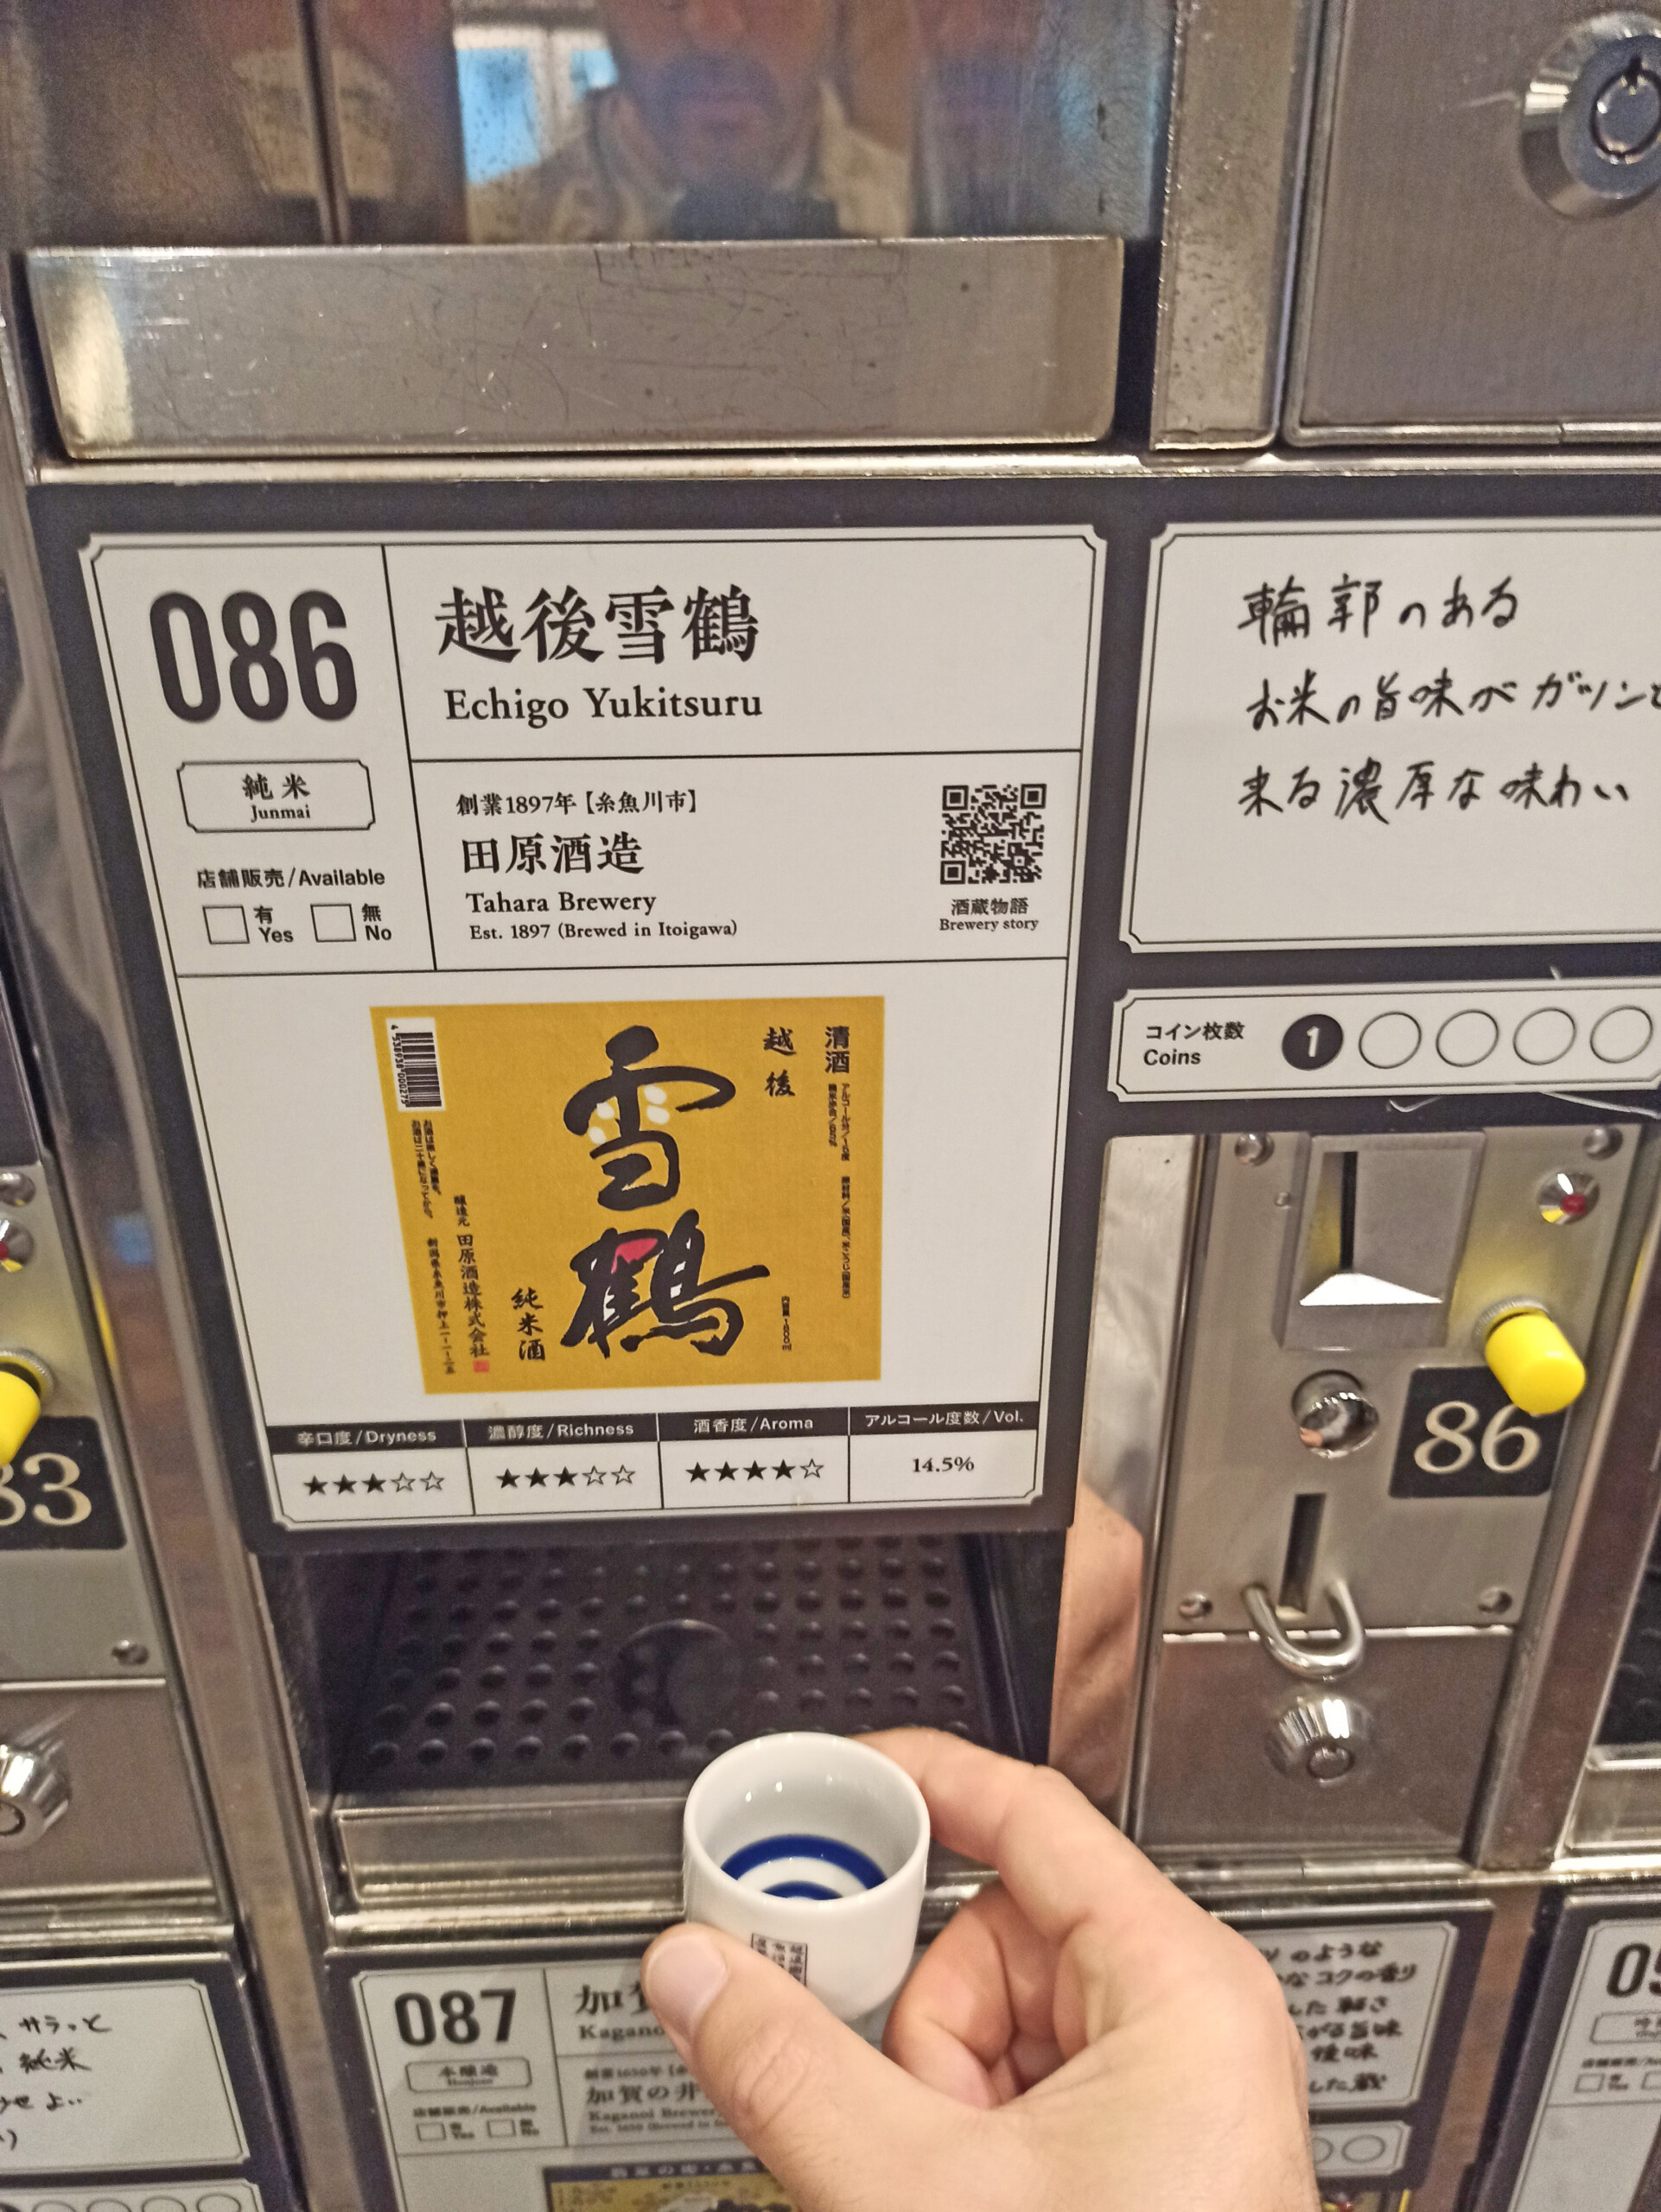 Ponshukan sake vending machine